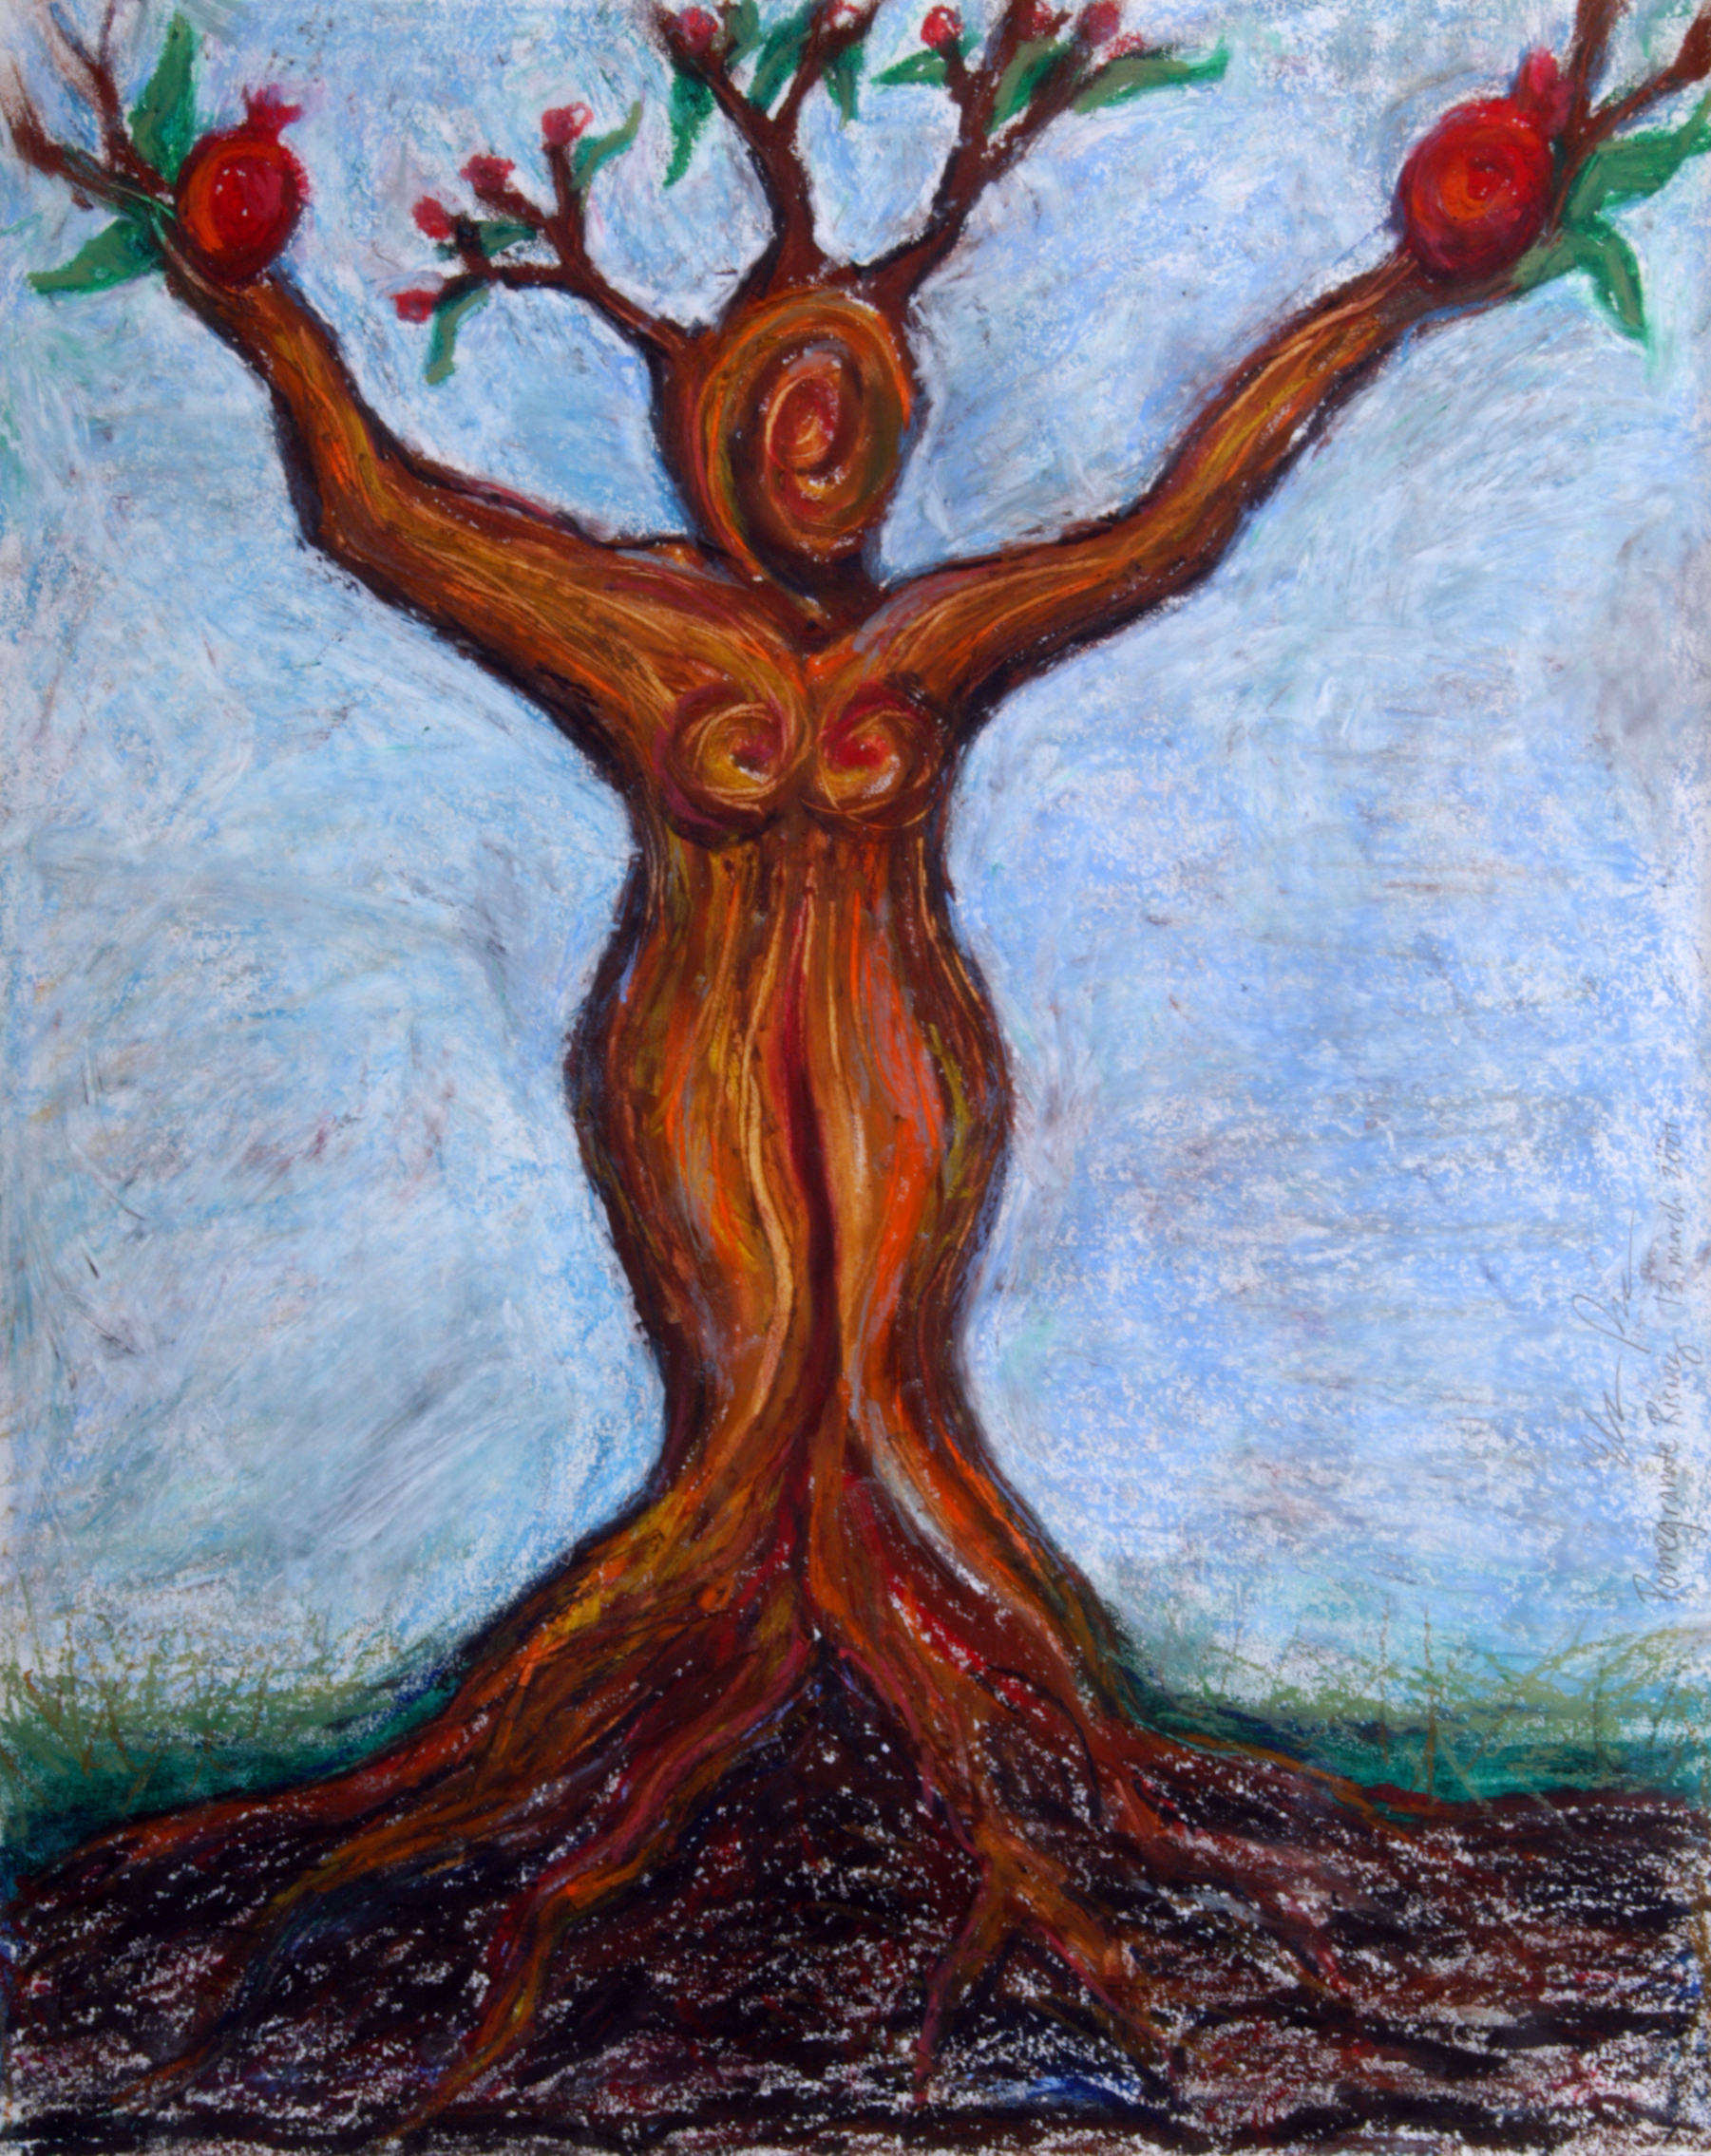 Pomegranate Rising, 2001
Oil pastel 17”h x 13.5”w, Eleanor Ruckman